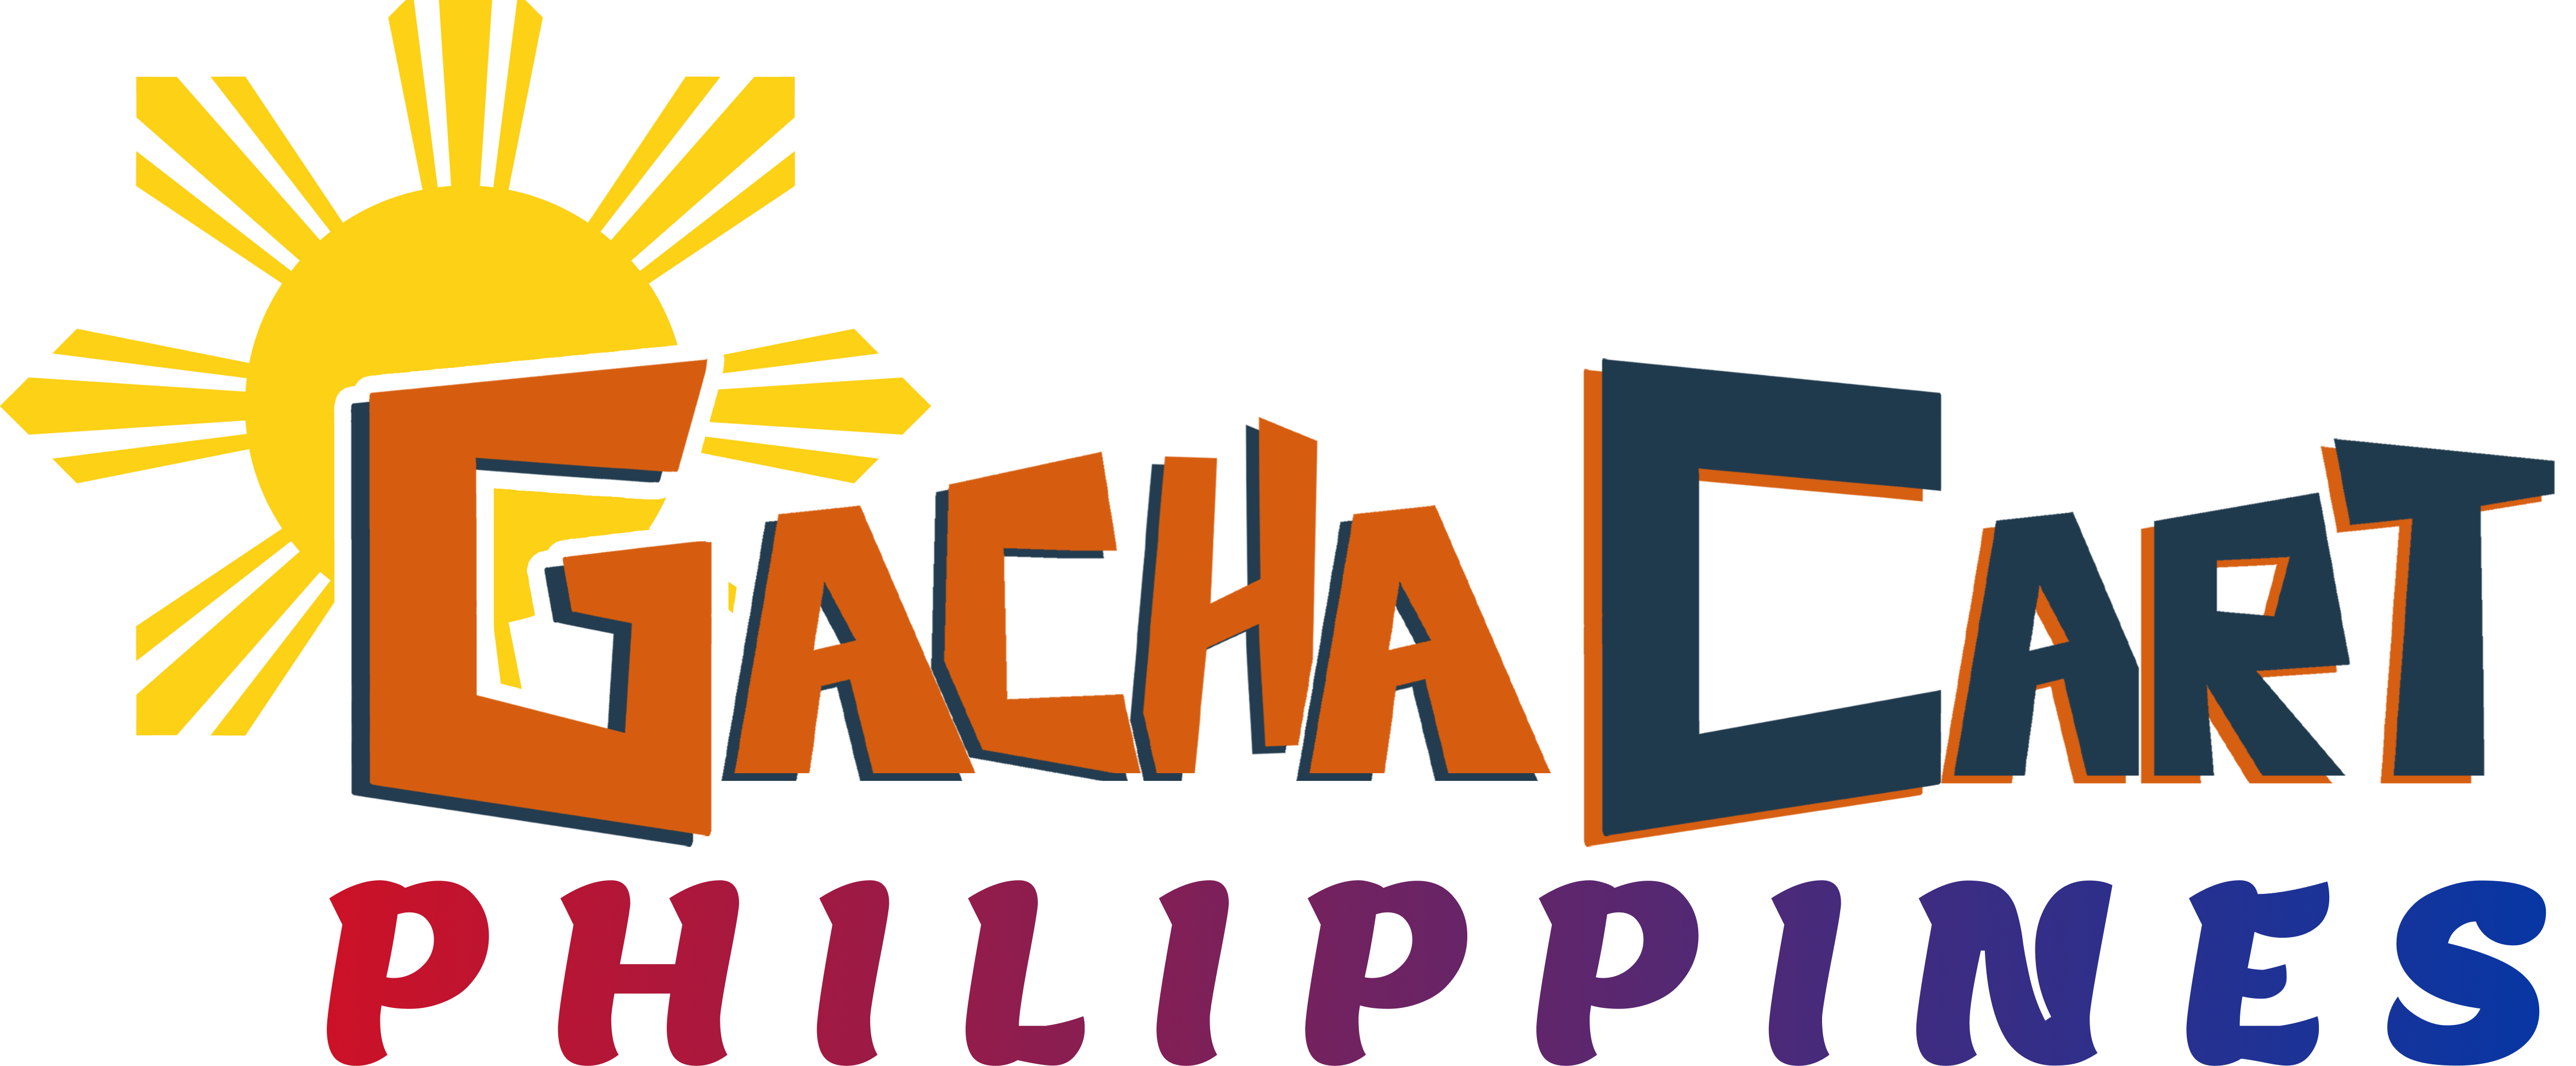 GachaCart Philippines